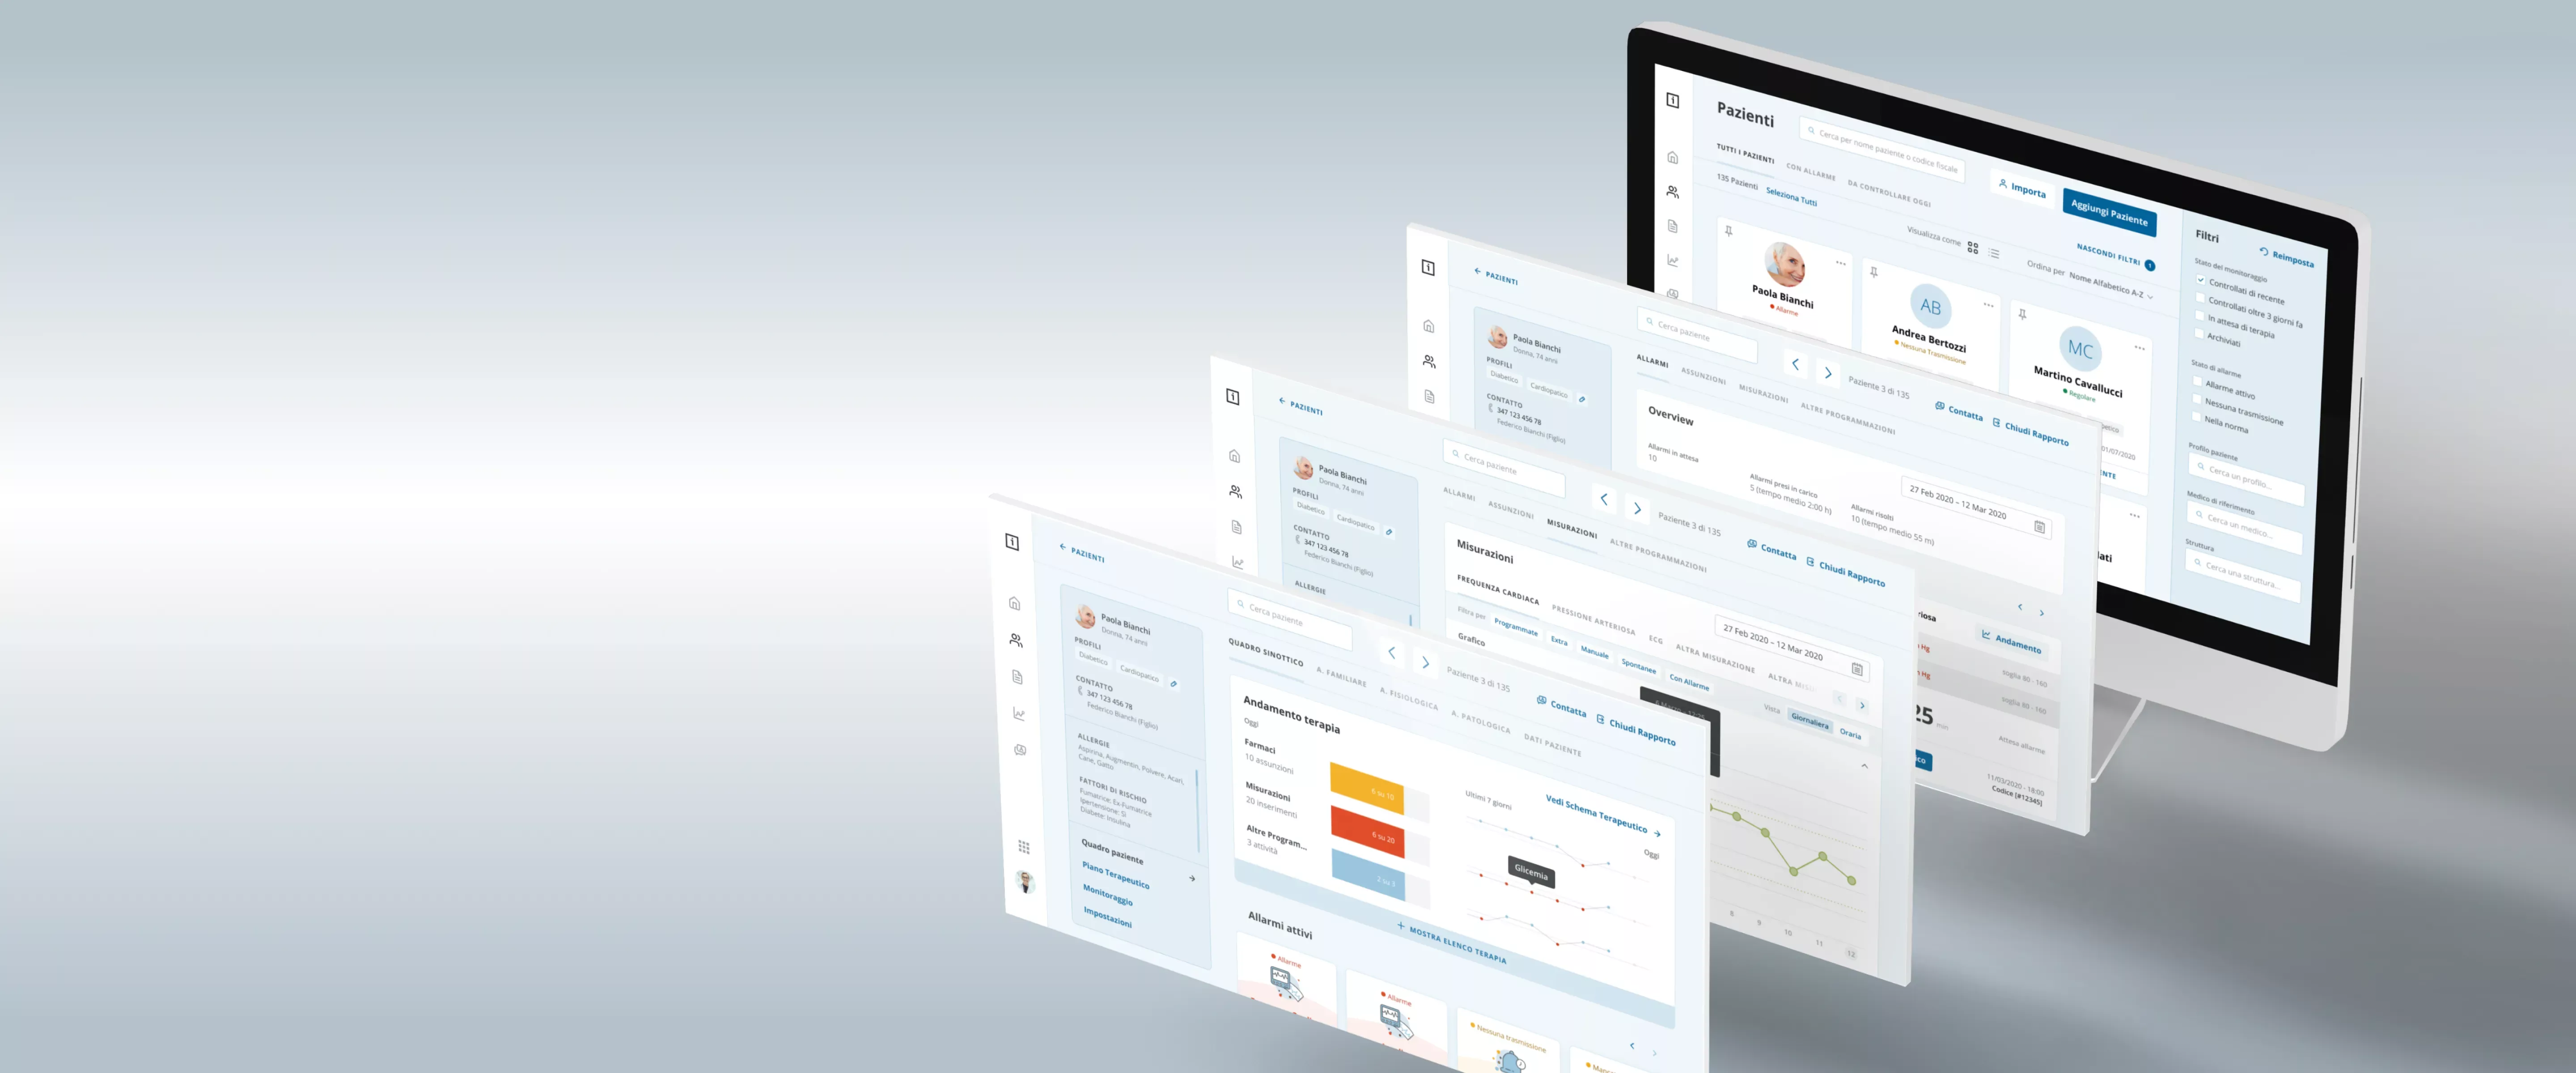 Some screens of desktop view of Sm@rtEVEN platform